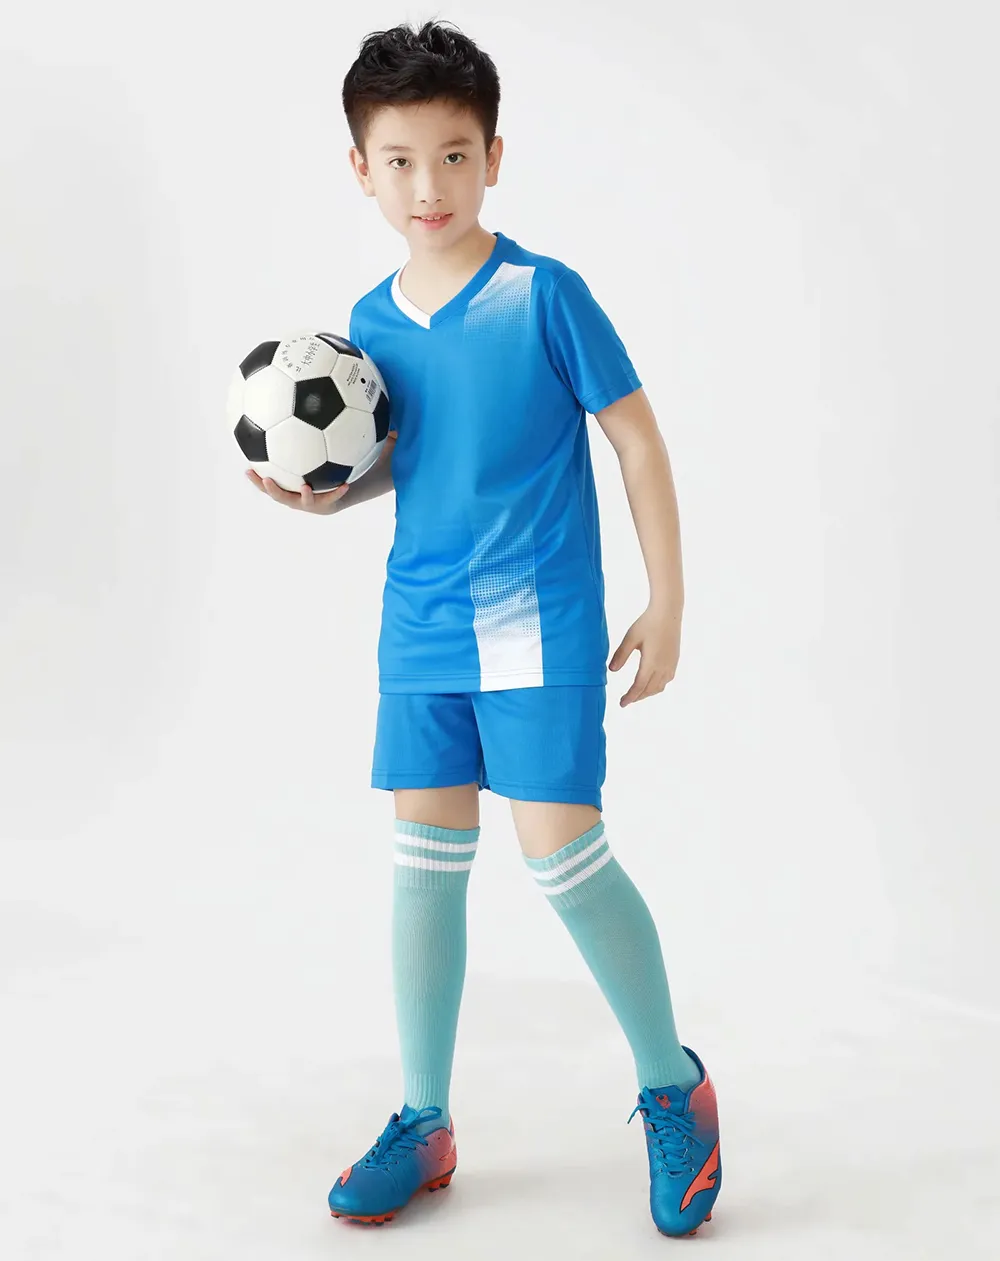 Jessie_kicks #G461 LJR aiir jordan 5 Design 2021 Fashion Truien Kinderkleding Ourtdoor Sport